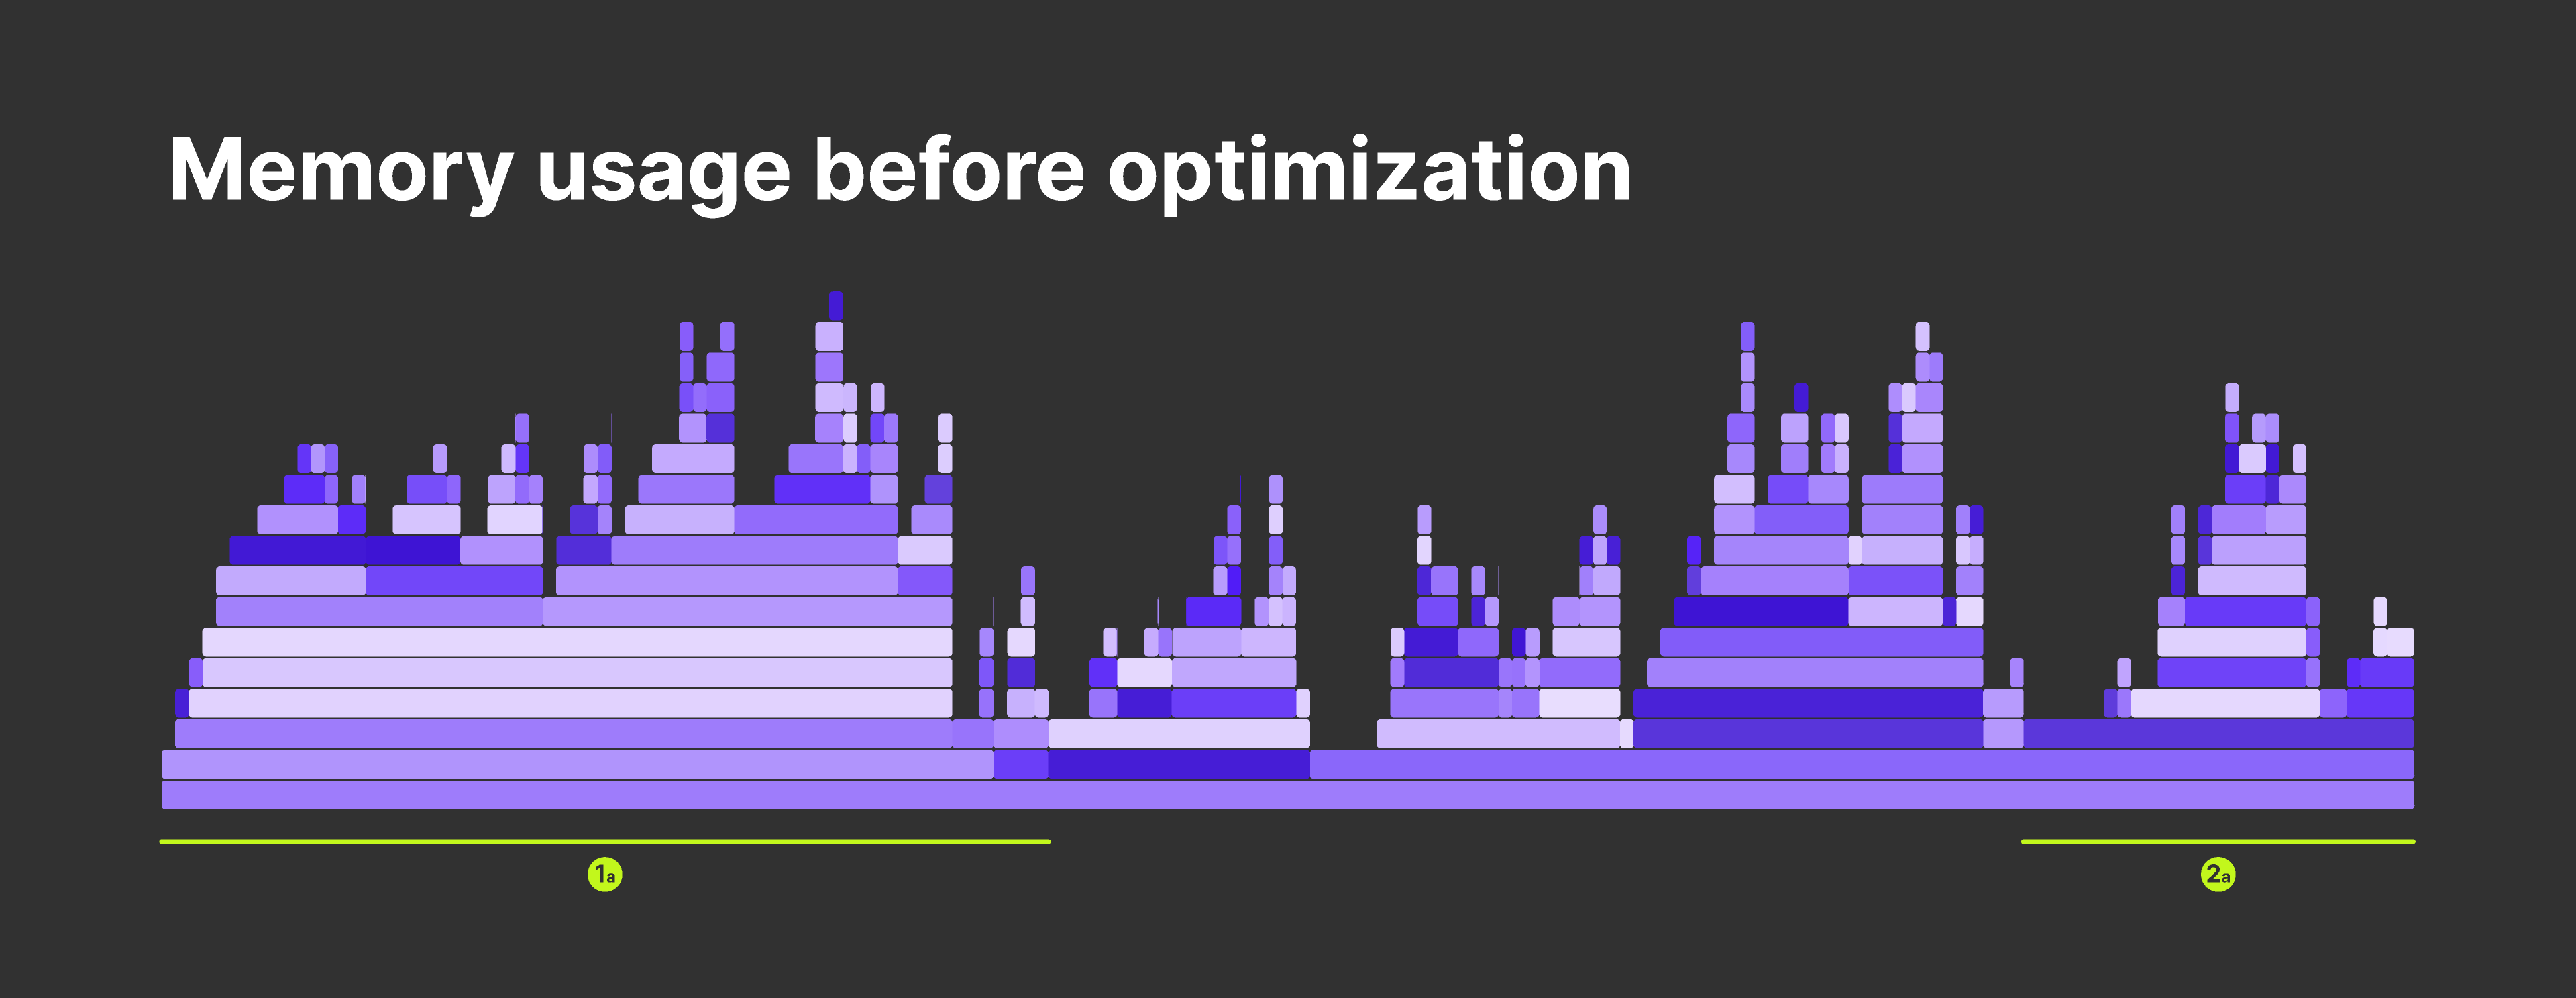 memory usage before optimization